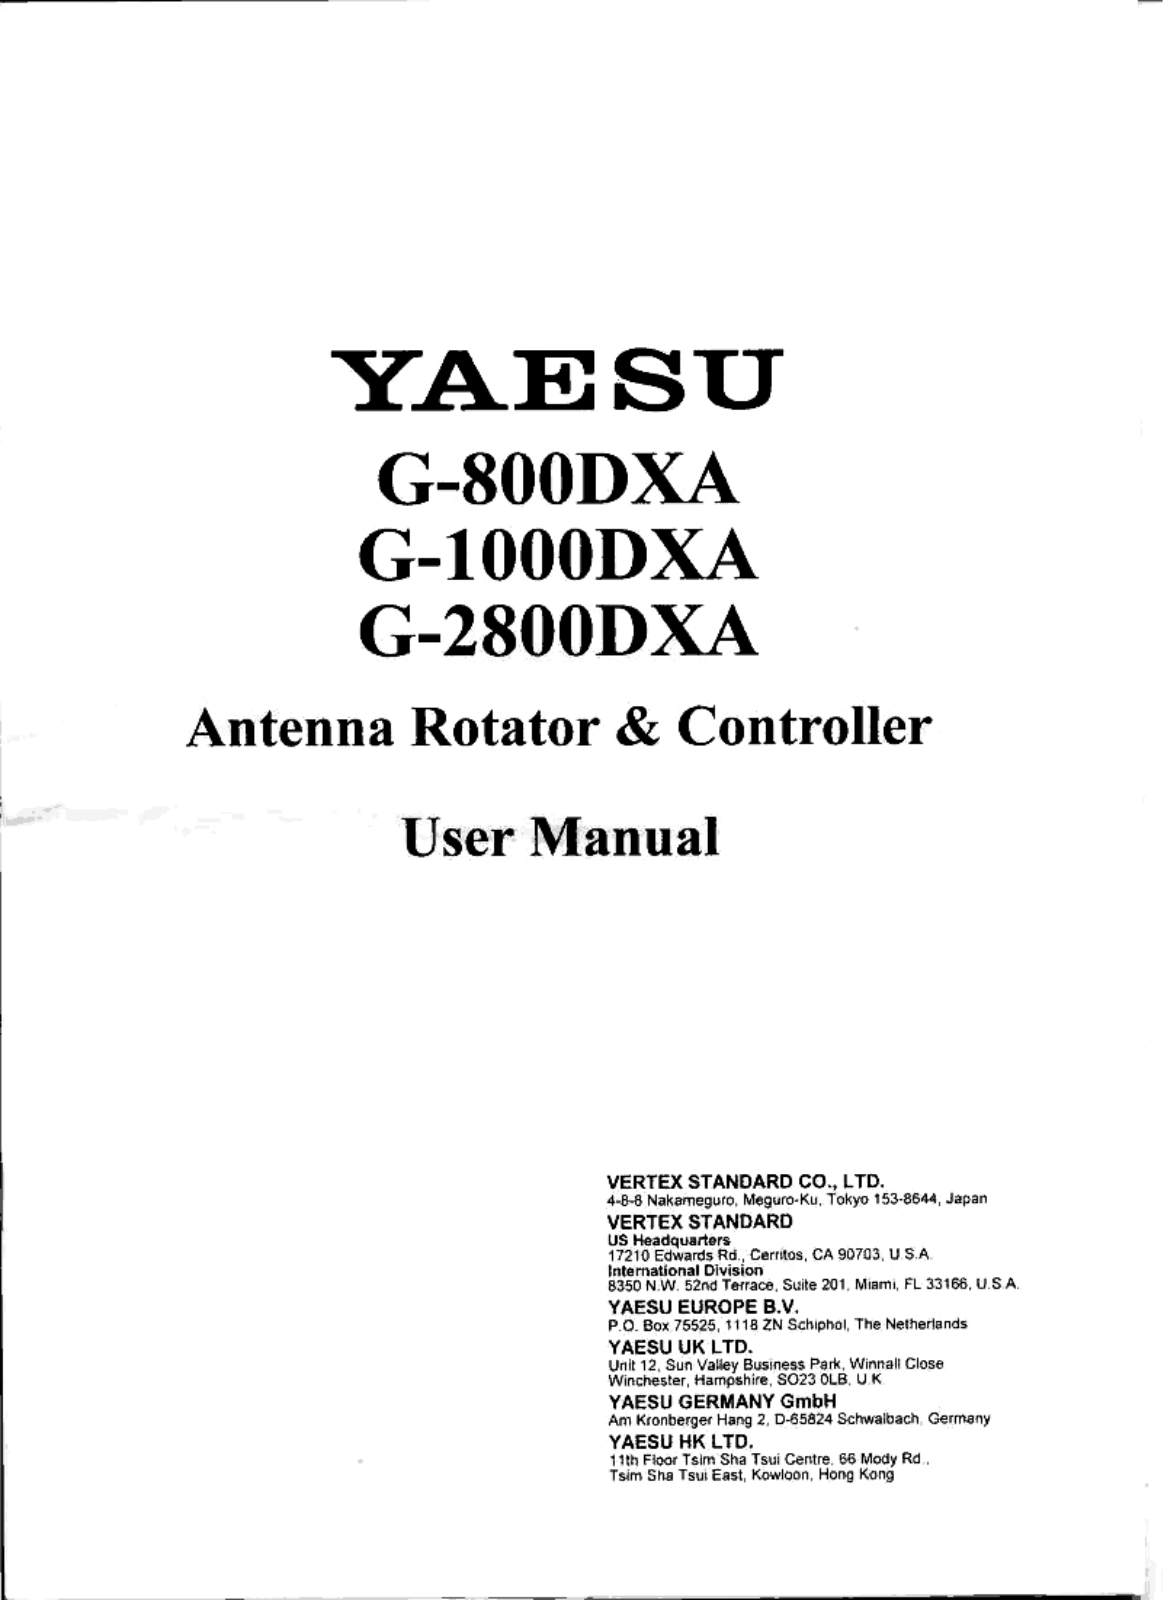 Yaesu G-1000DXA, G-2800DXA, G-800DXA INSTRUCTION MANUAL